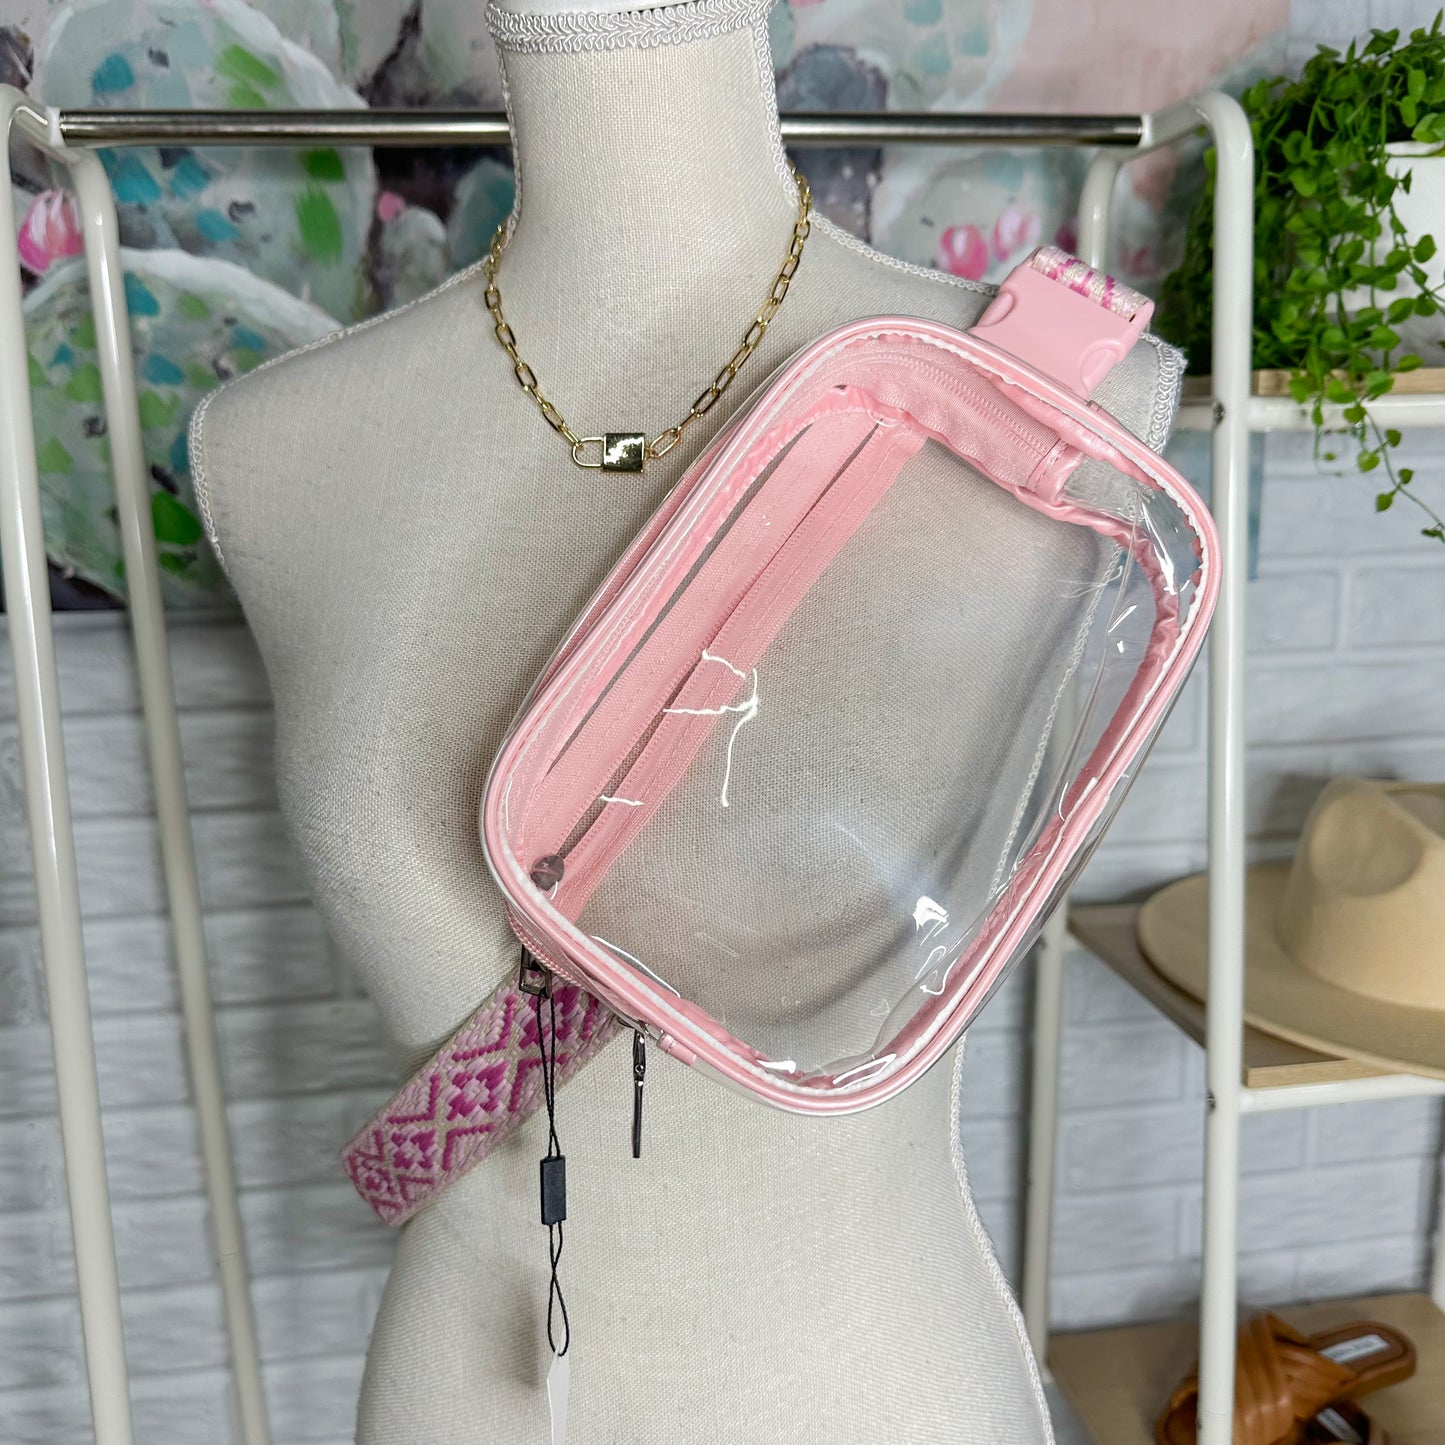 New Clear Fanny Pack Belt Bag - Pink